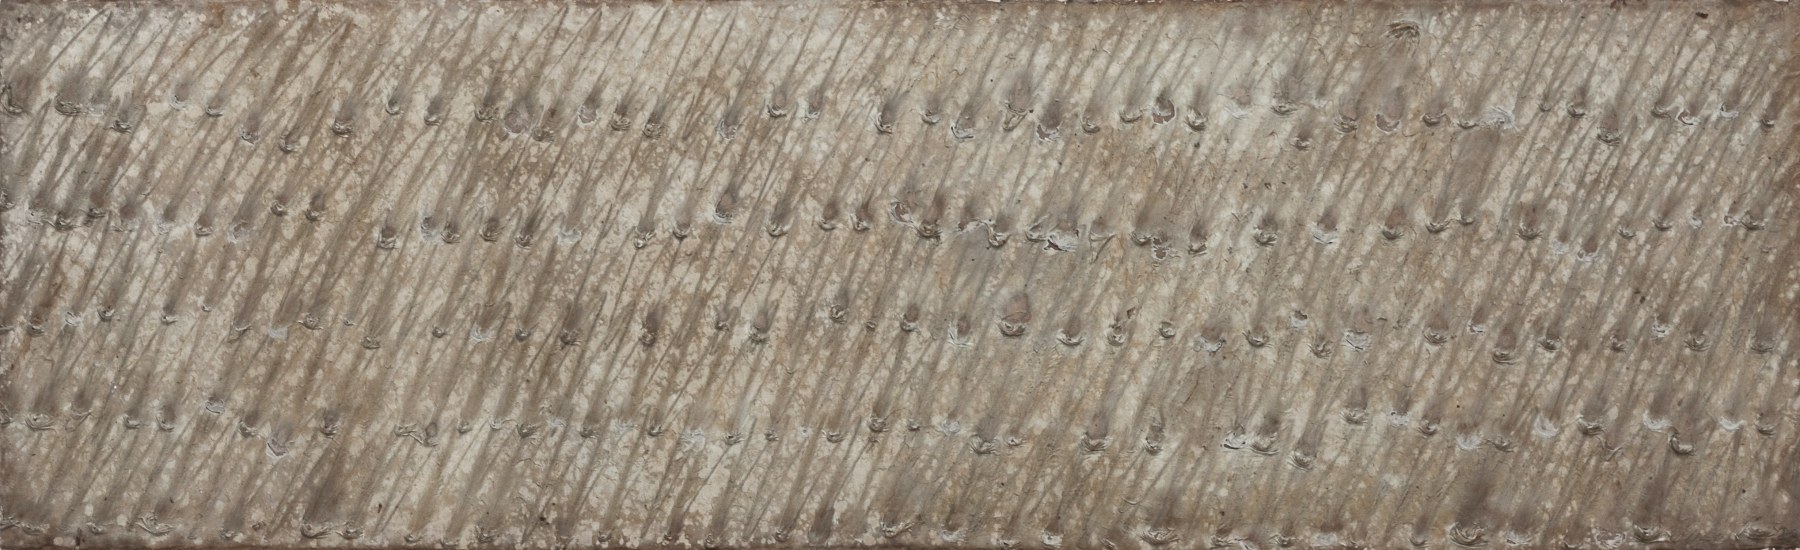 Park Seo-Bo (b. 1931) Ecriture No. 155-82, 1982 Mixed media with Korean hanji paper on canvas 20.98 x 66.81 inches 53.3 x 169.7 cm